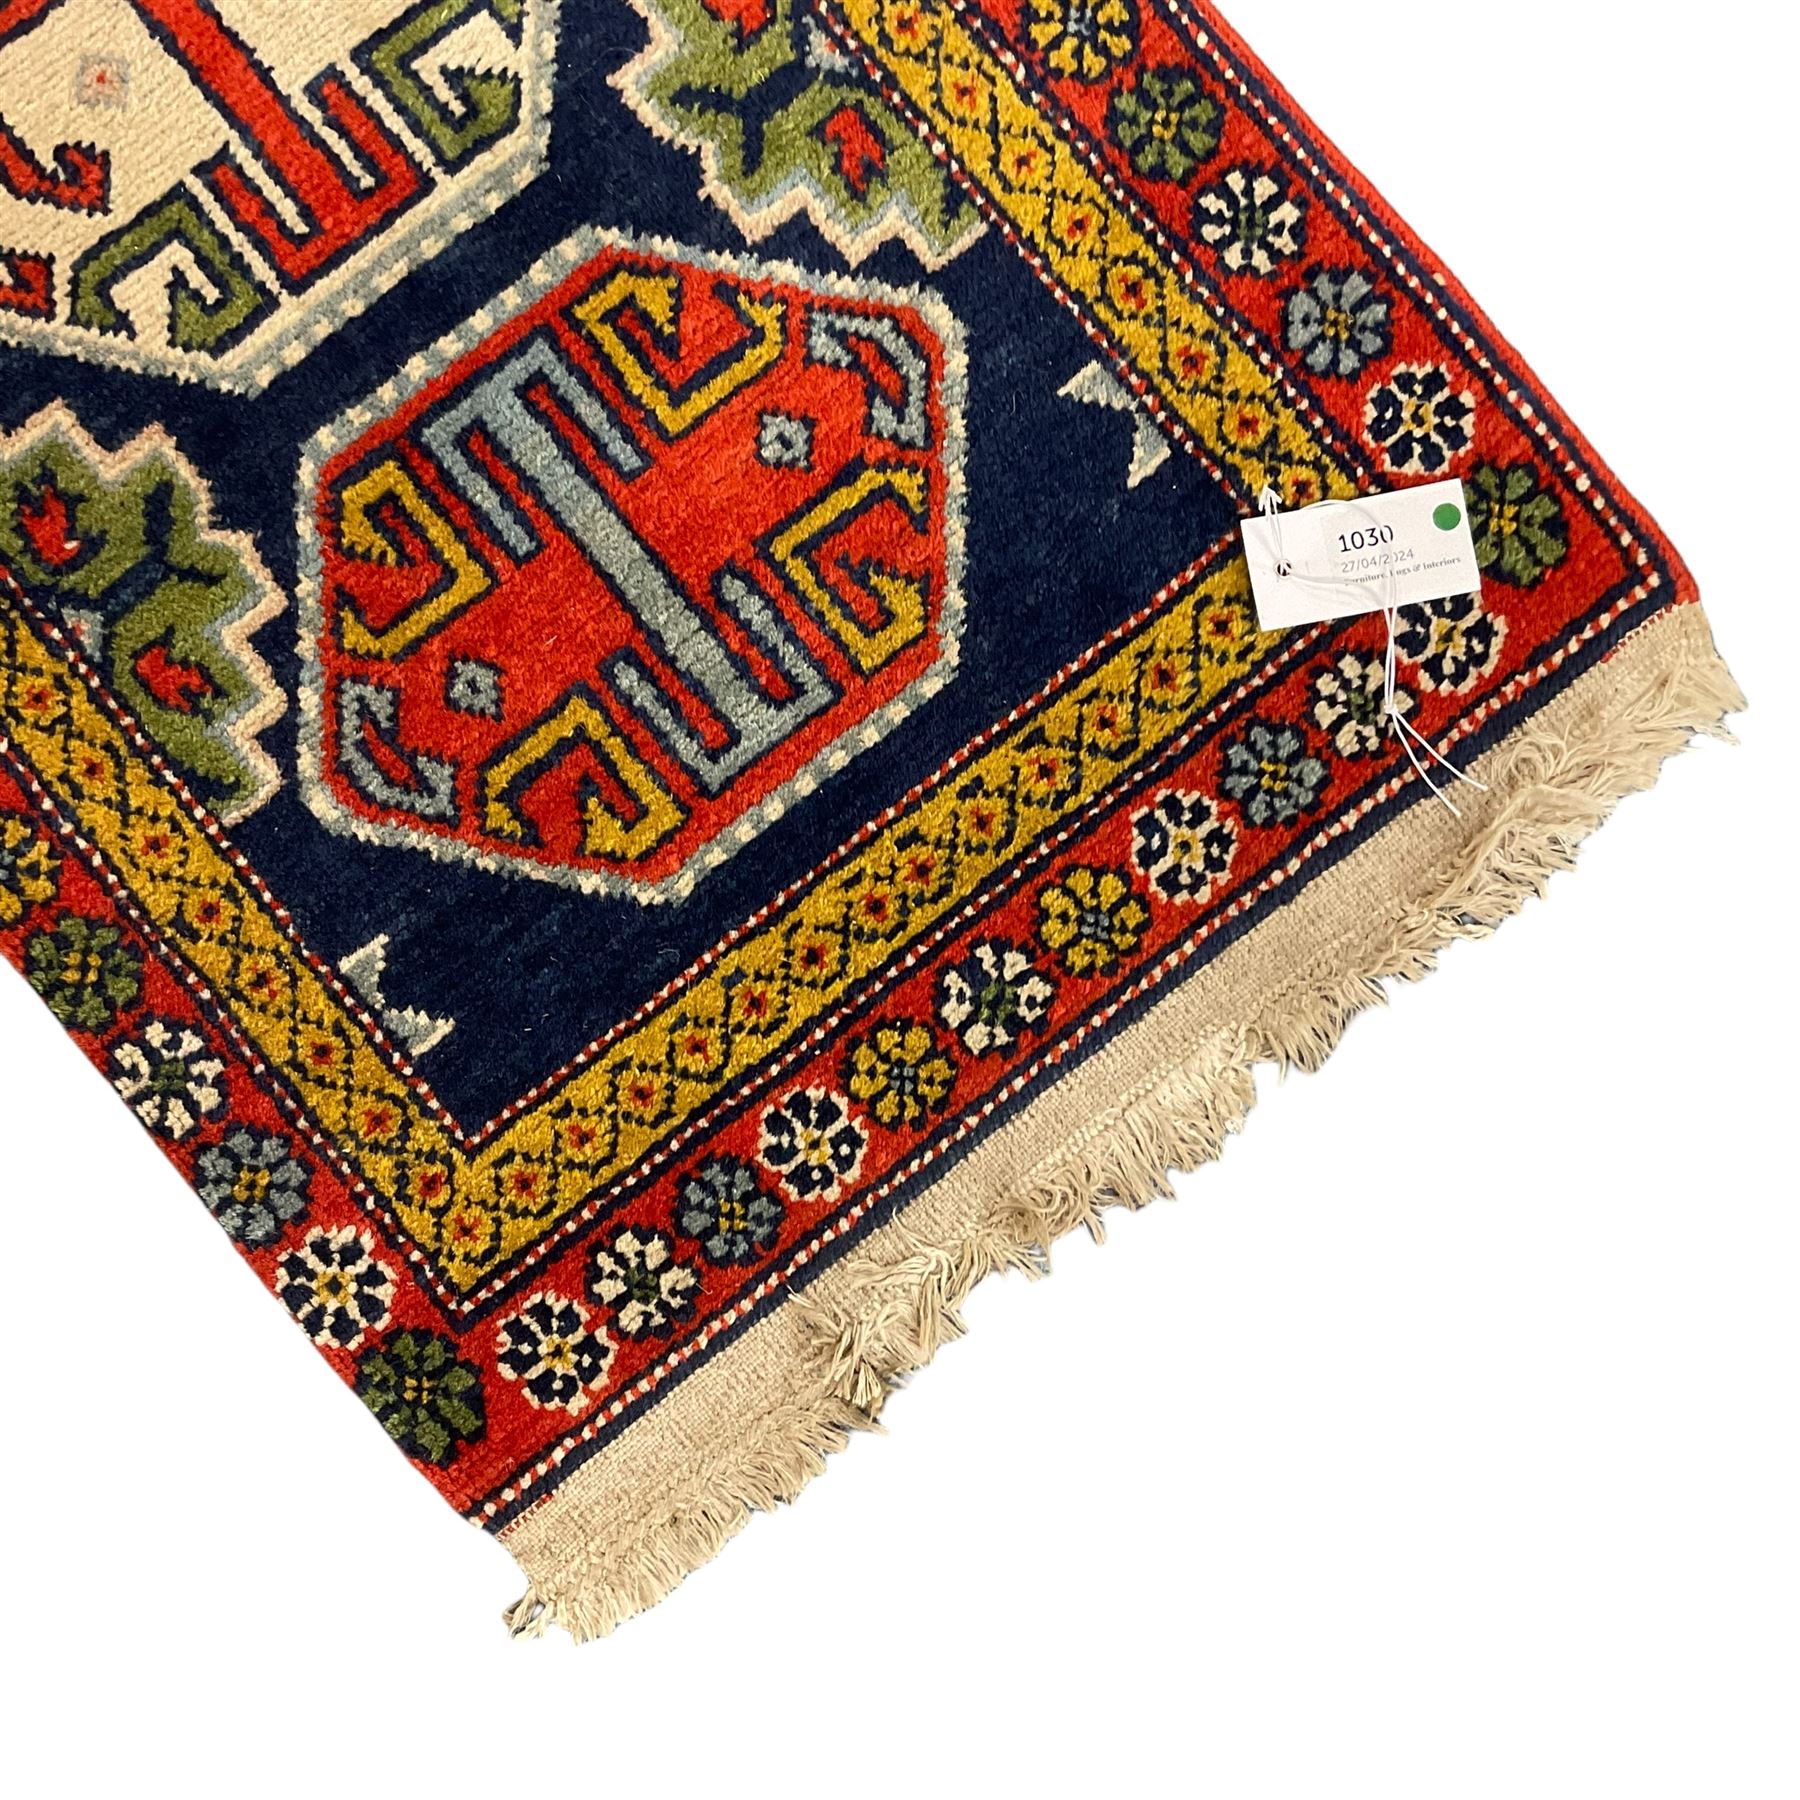 Small Persian indigo ground rug or mat - Image 4 of 5